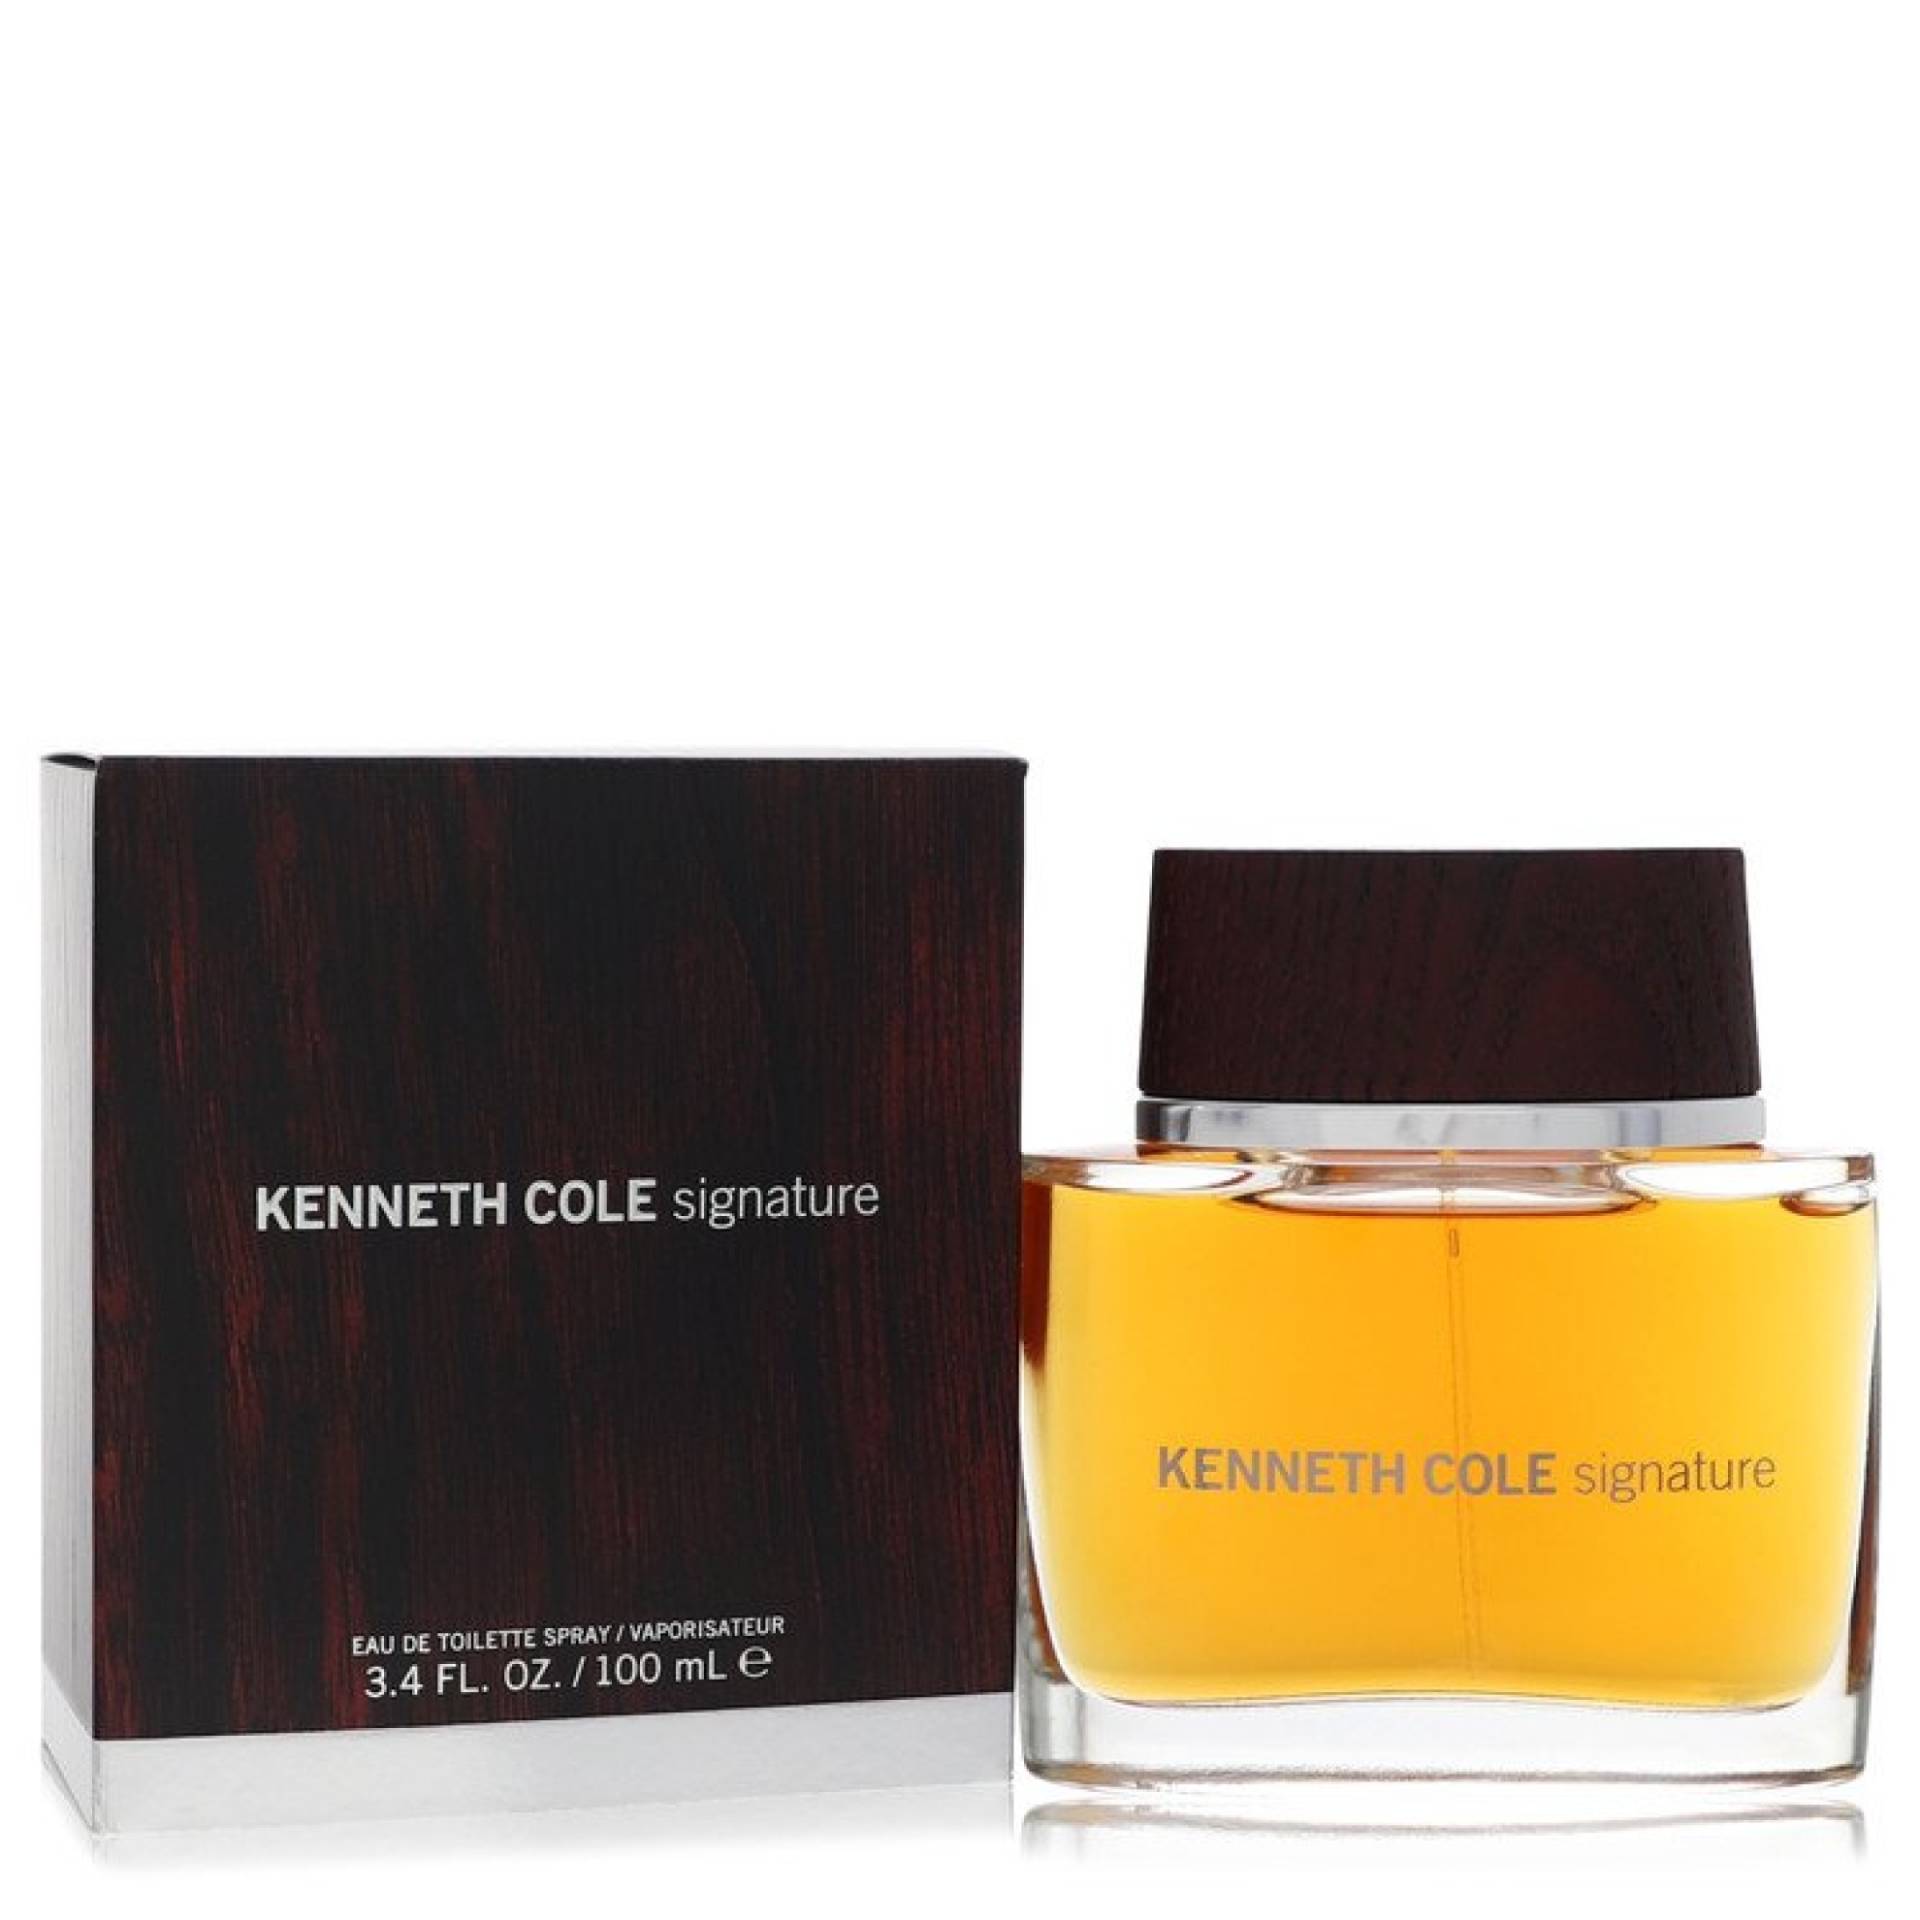 Kenneth Cole Signature Eau De Toilette Spray 100 ml von Kenneth Cole